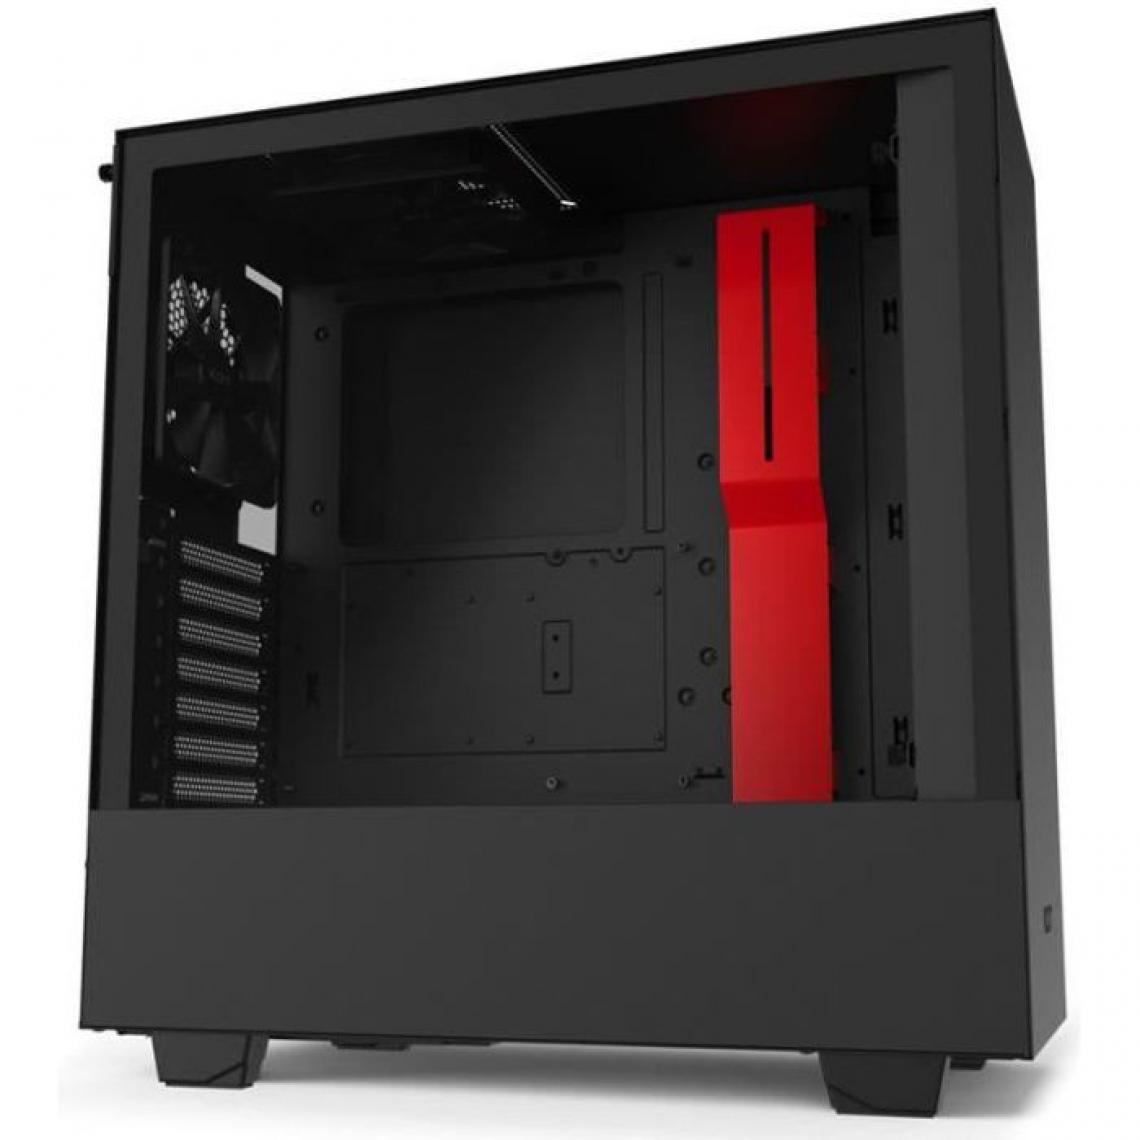 Nzxt - NZXT BOITIER PC H510 - USB 3.1 - Noir / Rouge Mat - Verre trempé - Format ATX (CA-H510B-BR) - Boitier PC